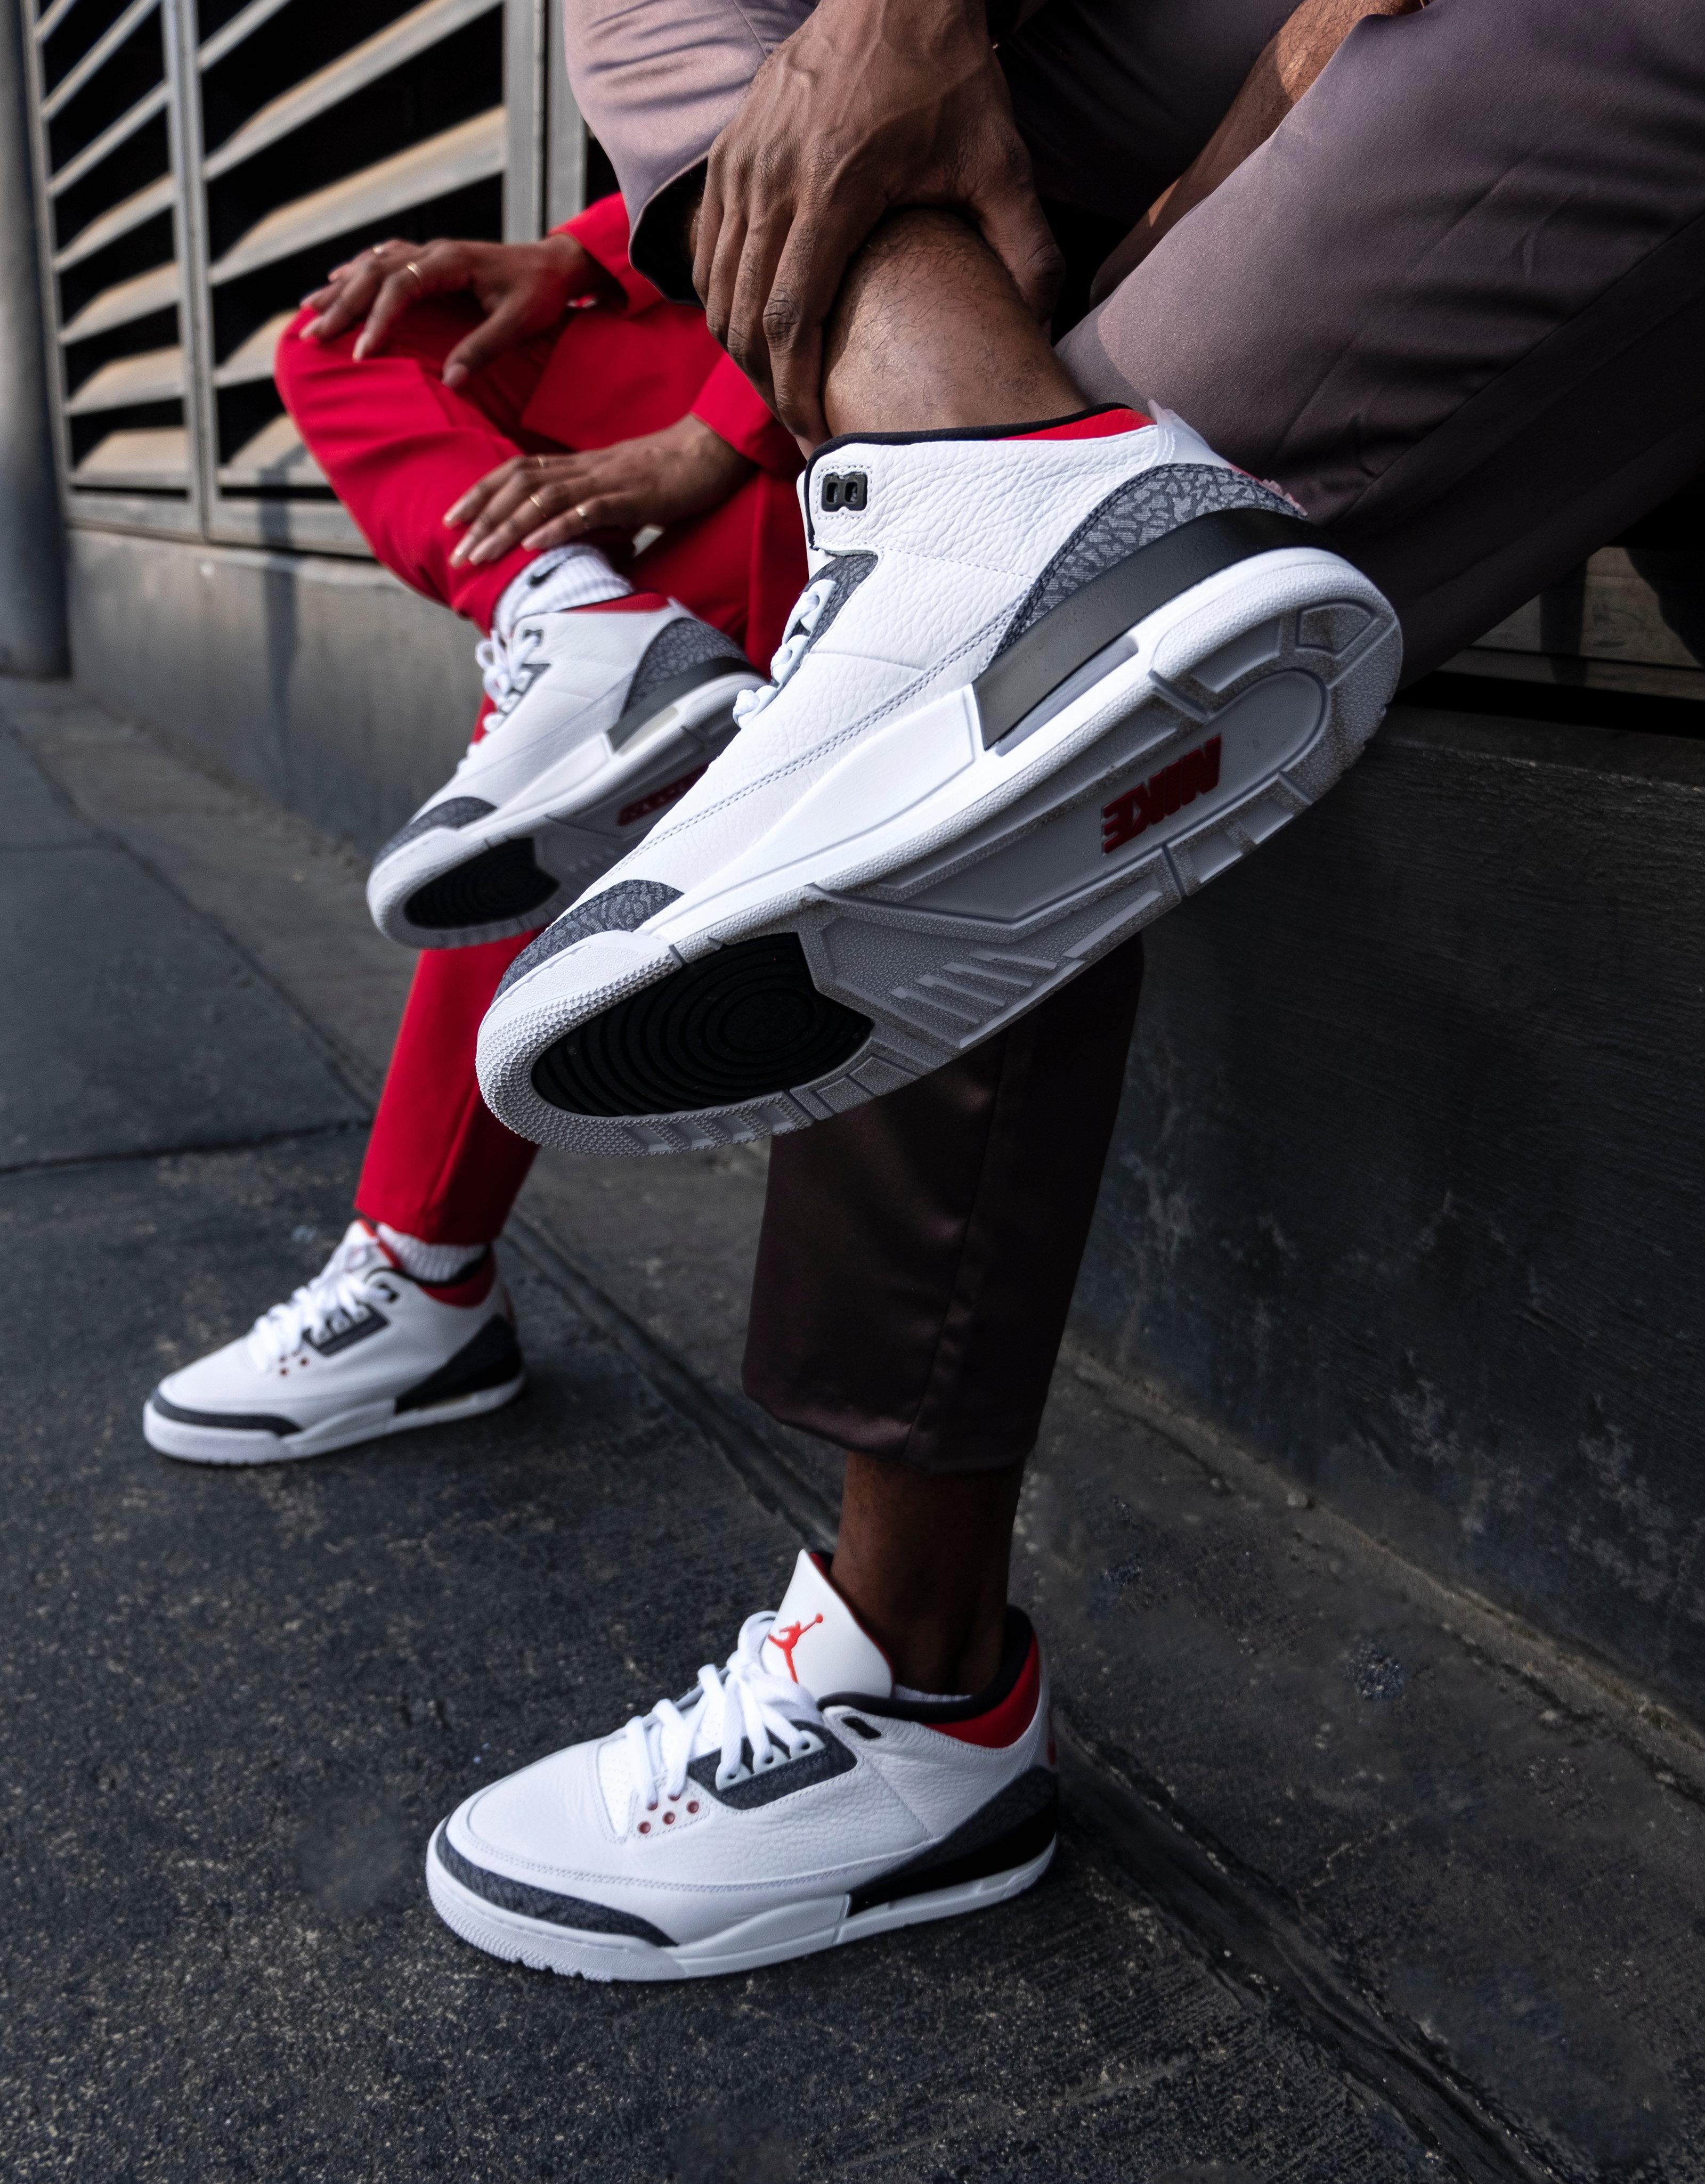 Air Jordan 3 Retro SE “Fire Red” Women's Shoe